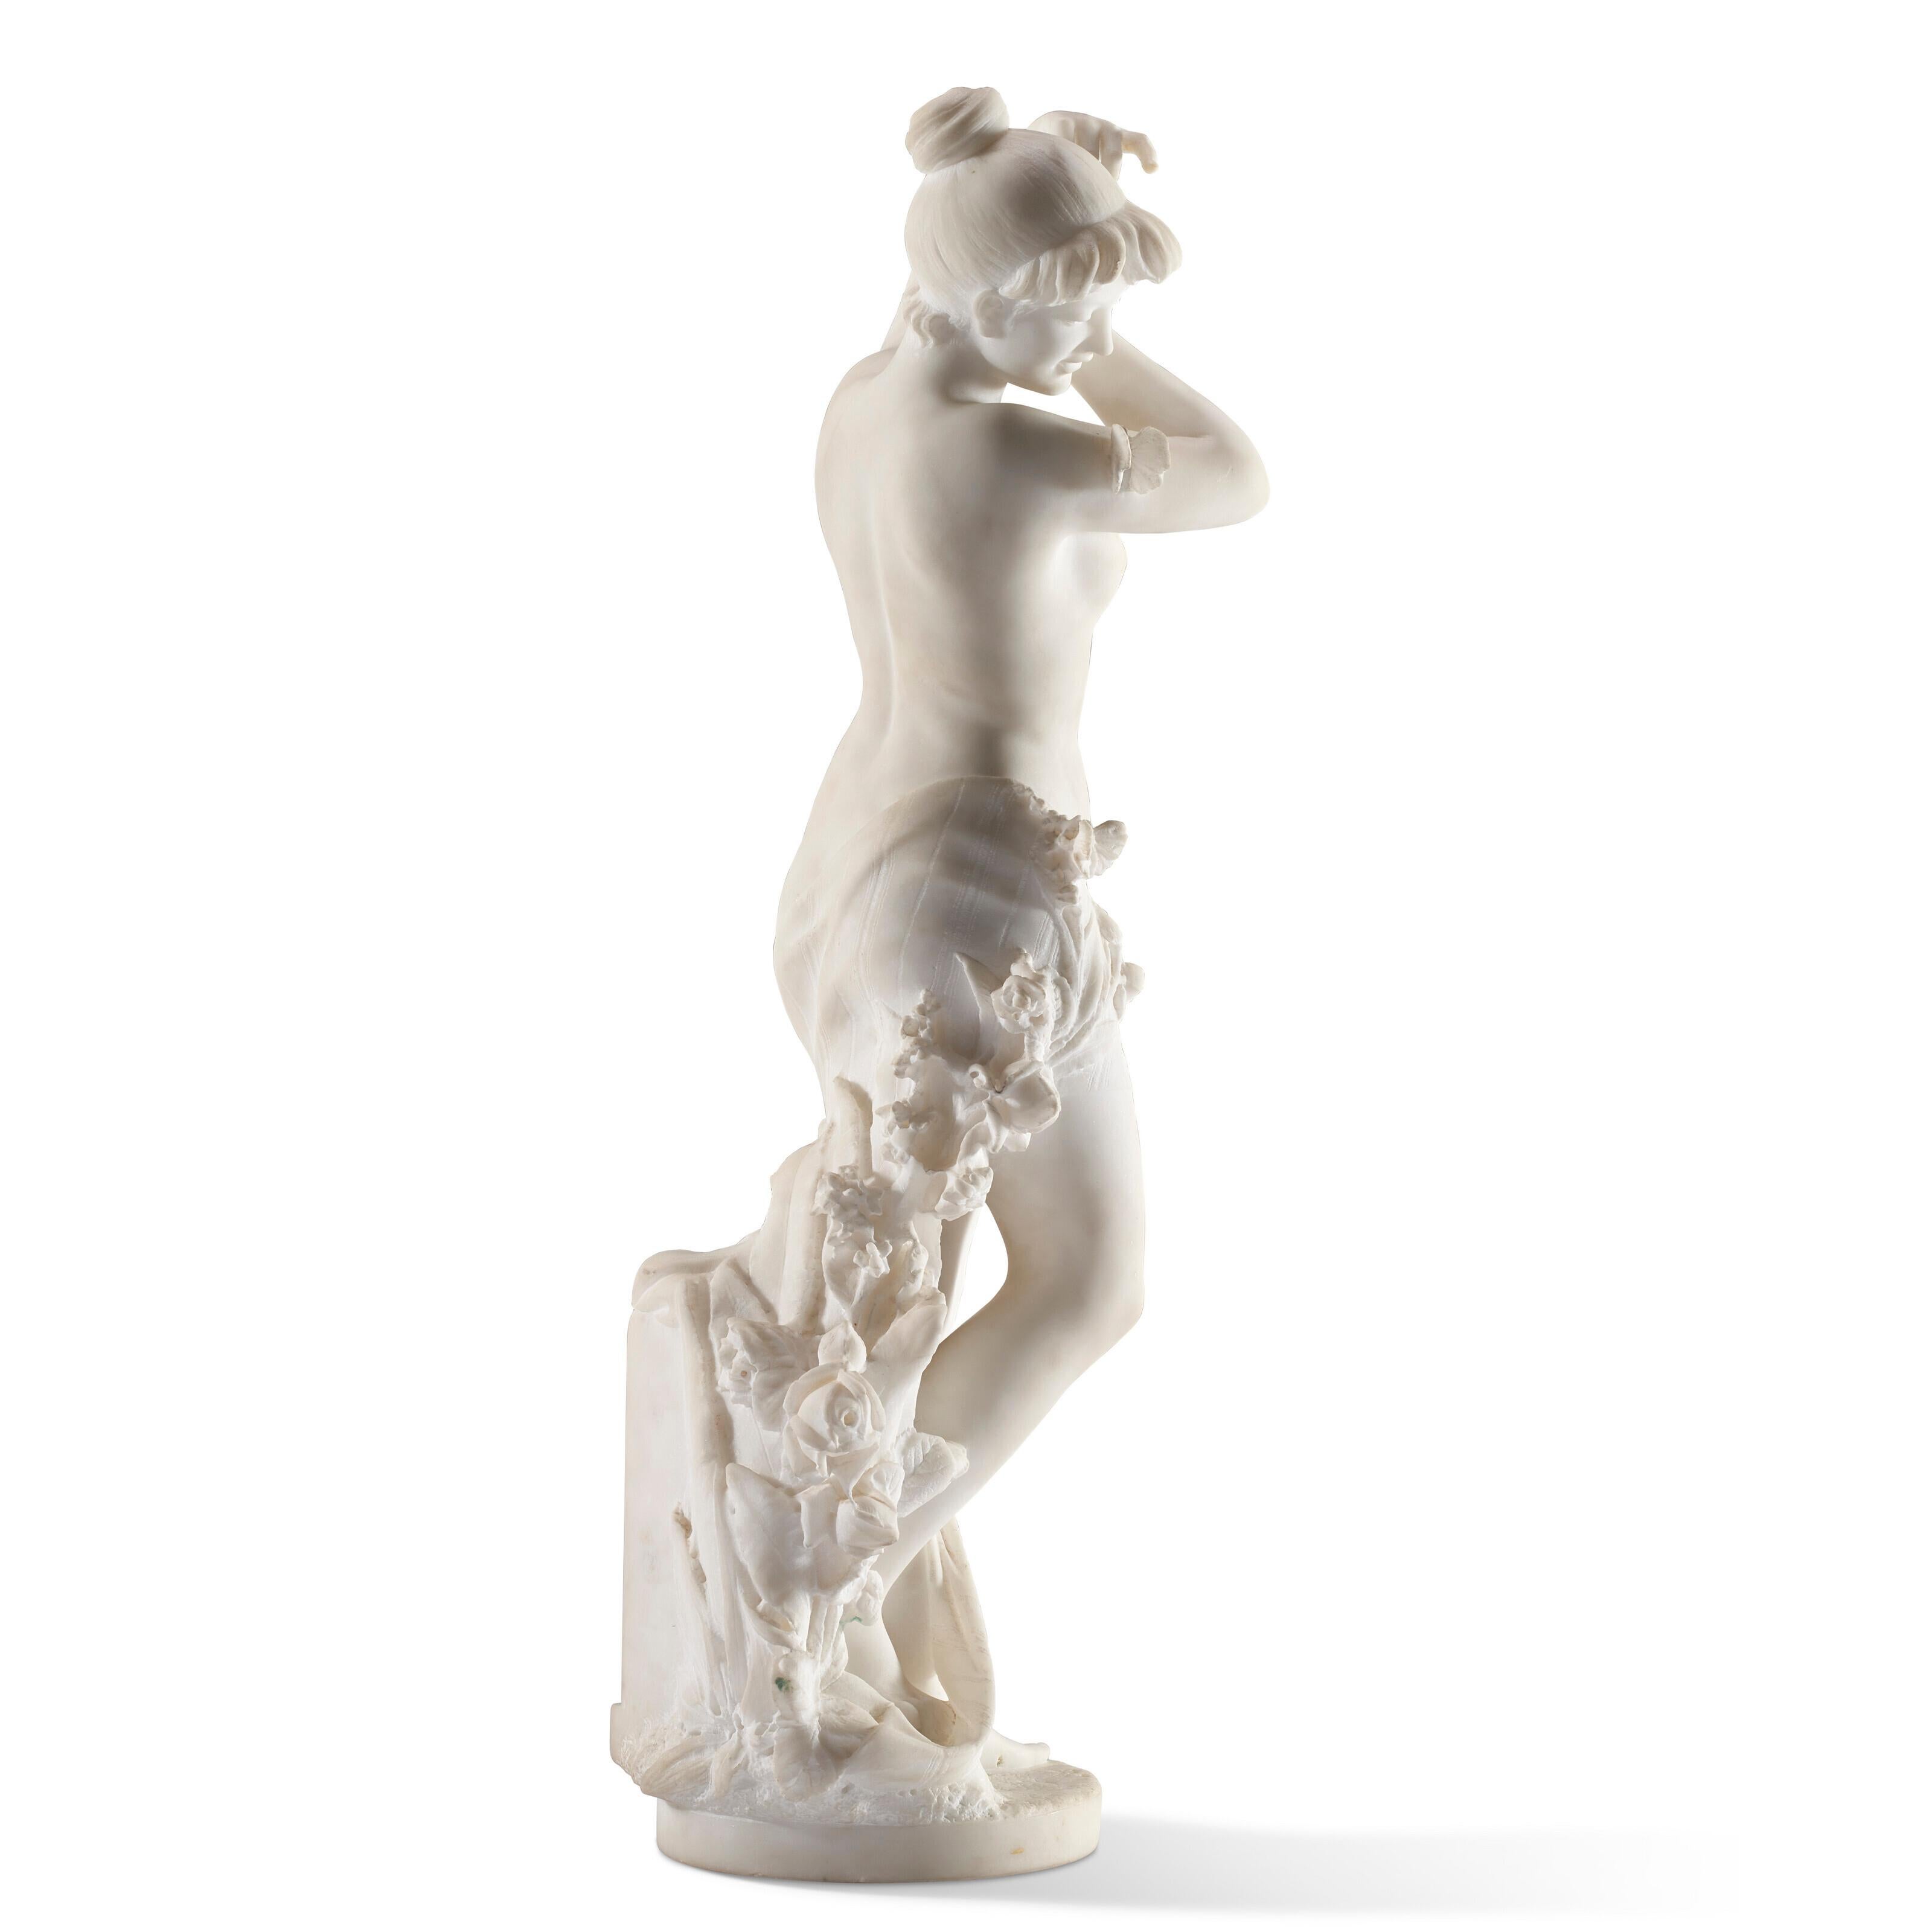 PIETRO BARZANTI
Italian, 1825-1895

Allegory Of Spring

Signed ‘P. Milanes/Galleria/P.Bazzanti/Florence.’    

Carved White Italian marble circa 19TH CENTURY
H 31.75 in. x W 10 in. x D 9.50 in.